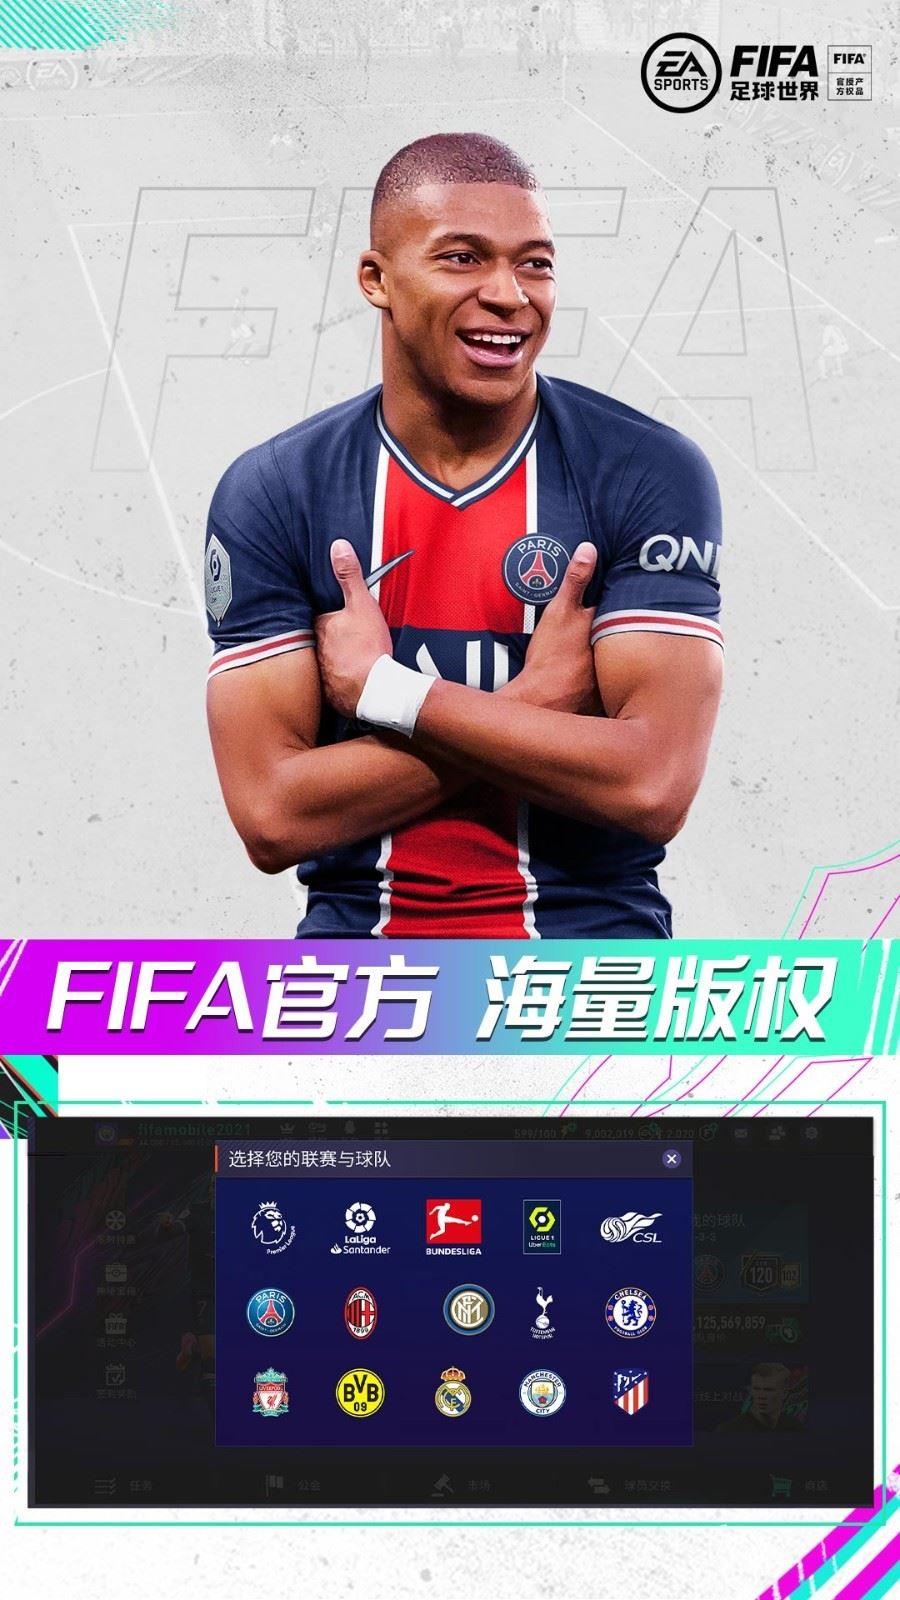 fifa online4手机版-fifa足球世界下载官方正版手游免费下载安装